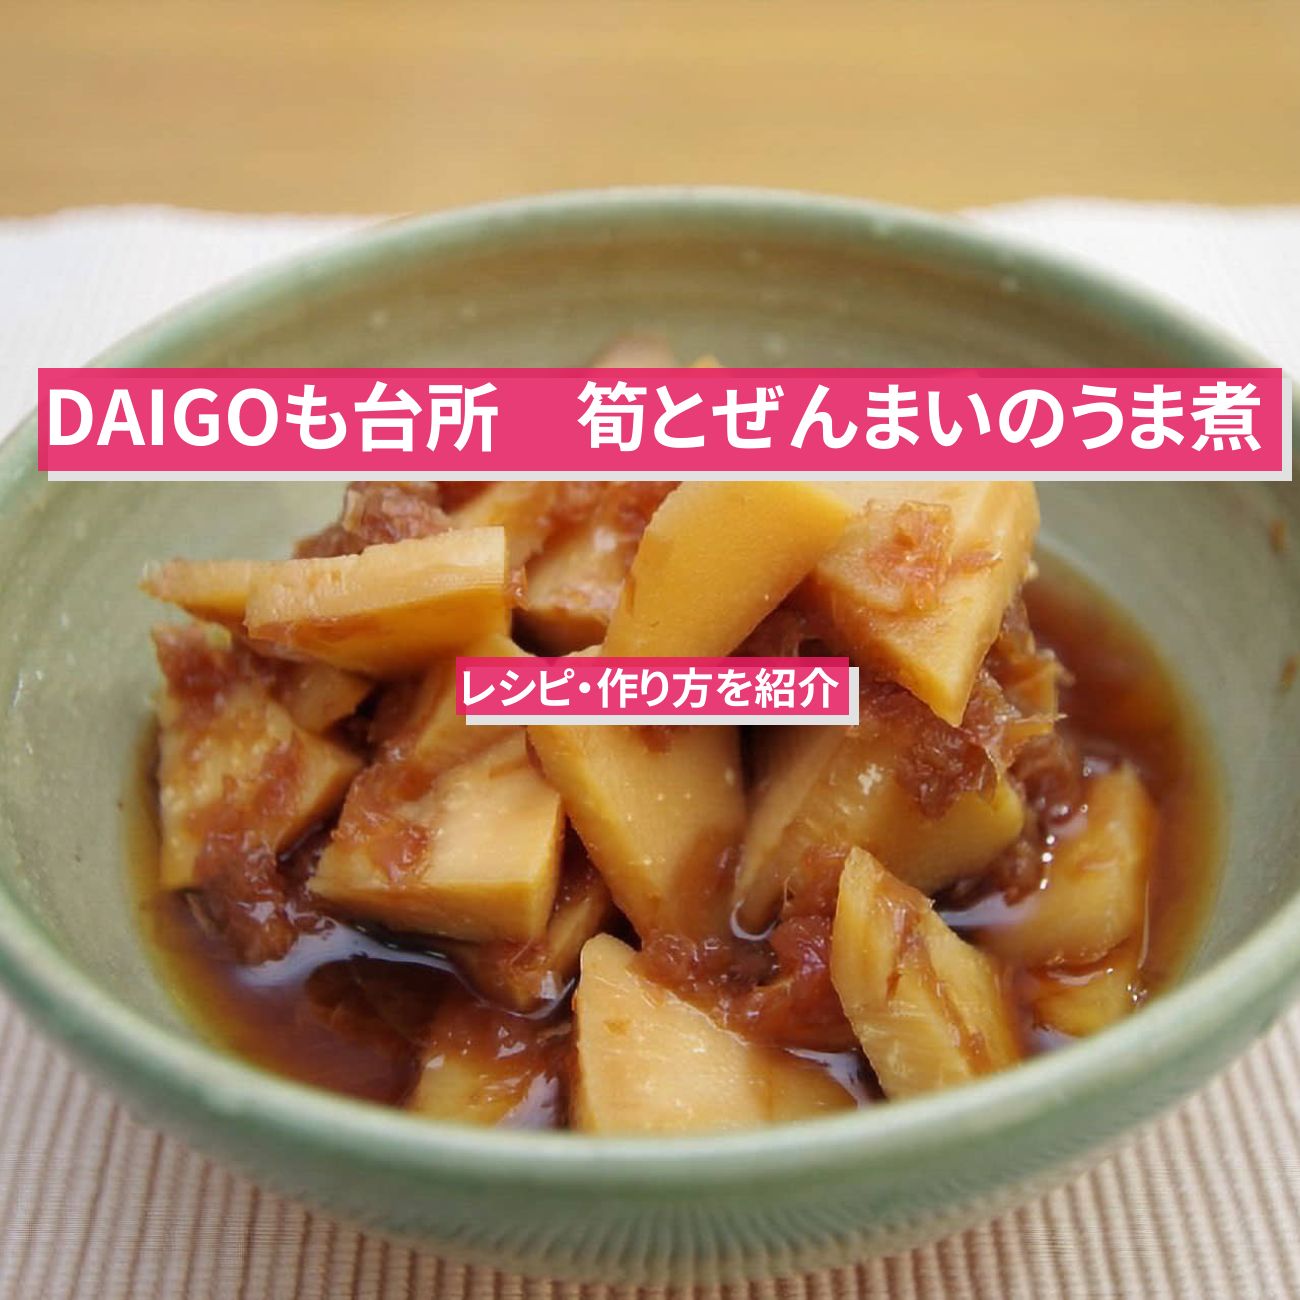 【DAIGOも台所】『筍とぜんまいのうま煮』のレシピ・作り方を紹介〔ダイゴも台所〕